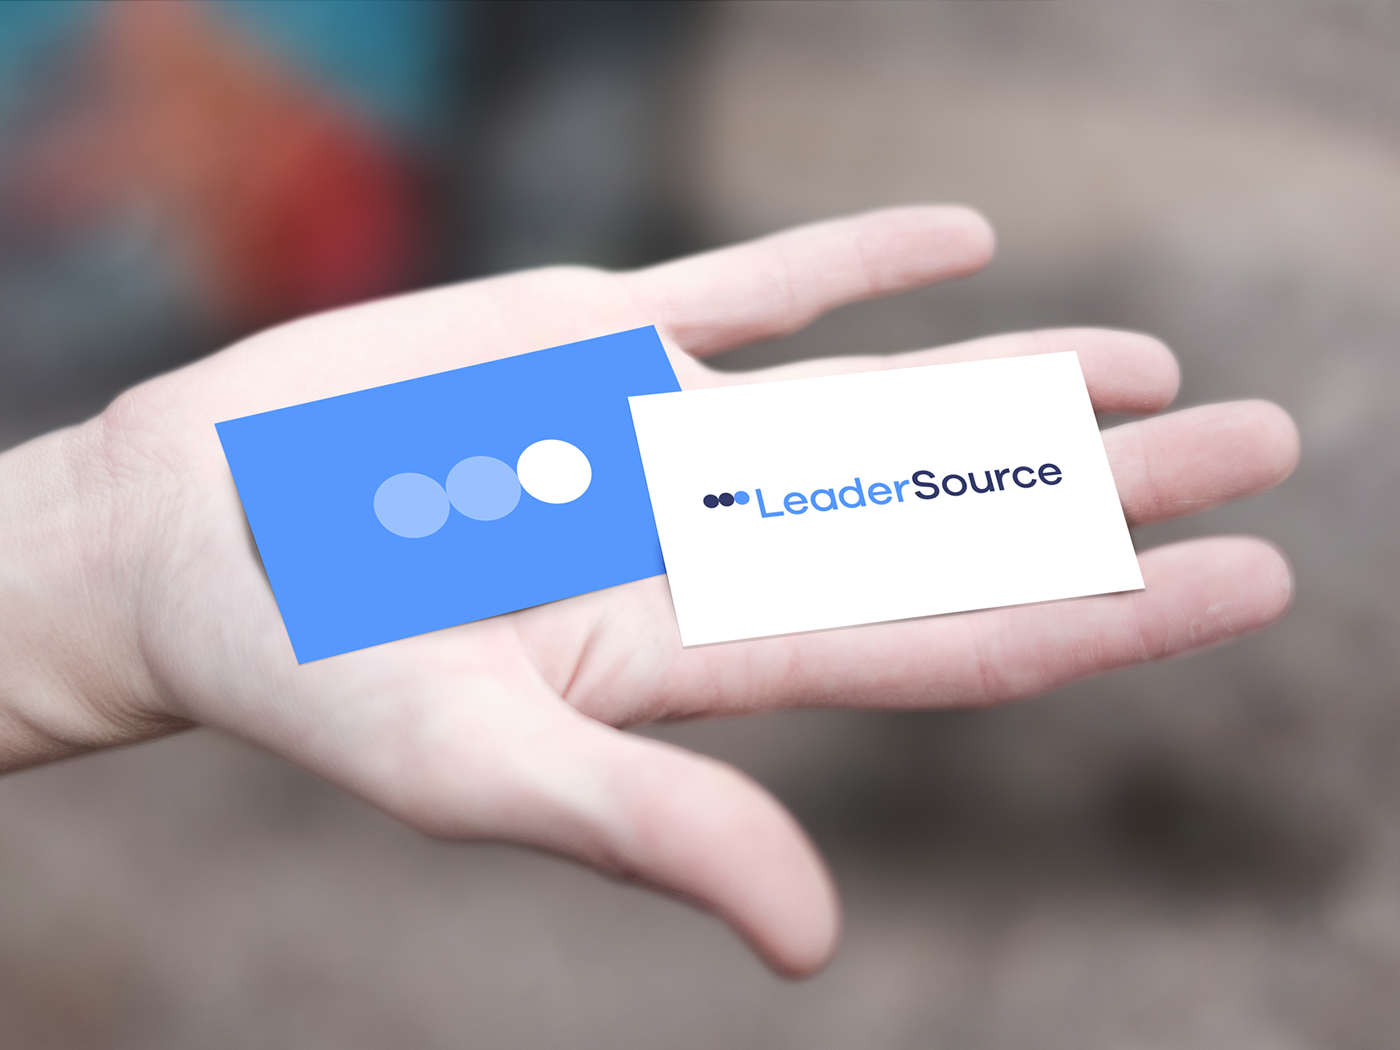 leader Source logo identity redesign rebranding Icon movement move jesus